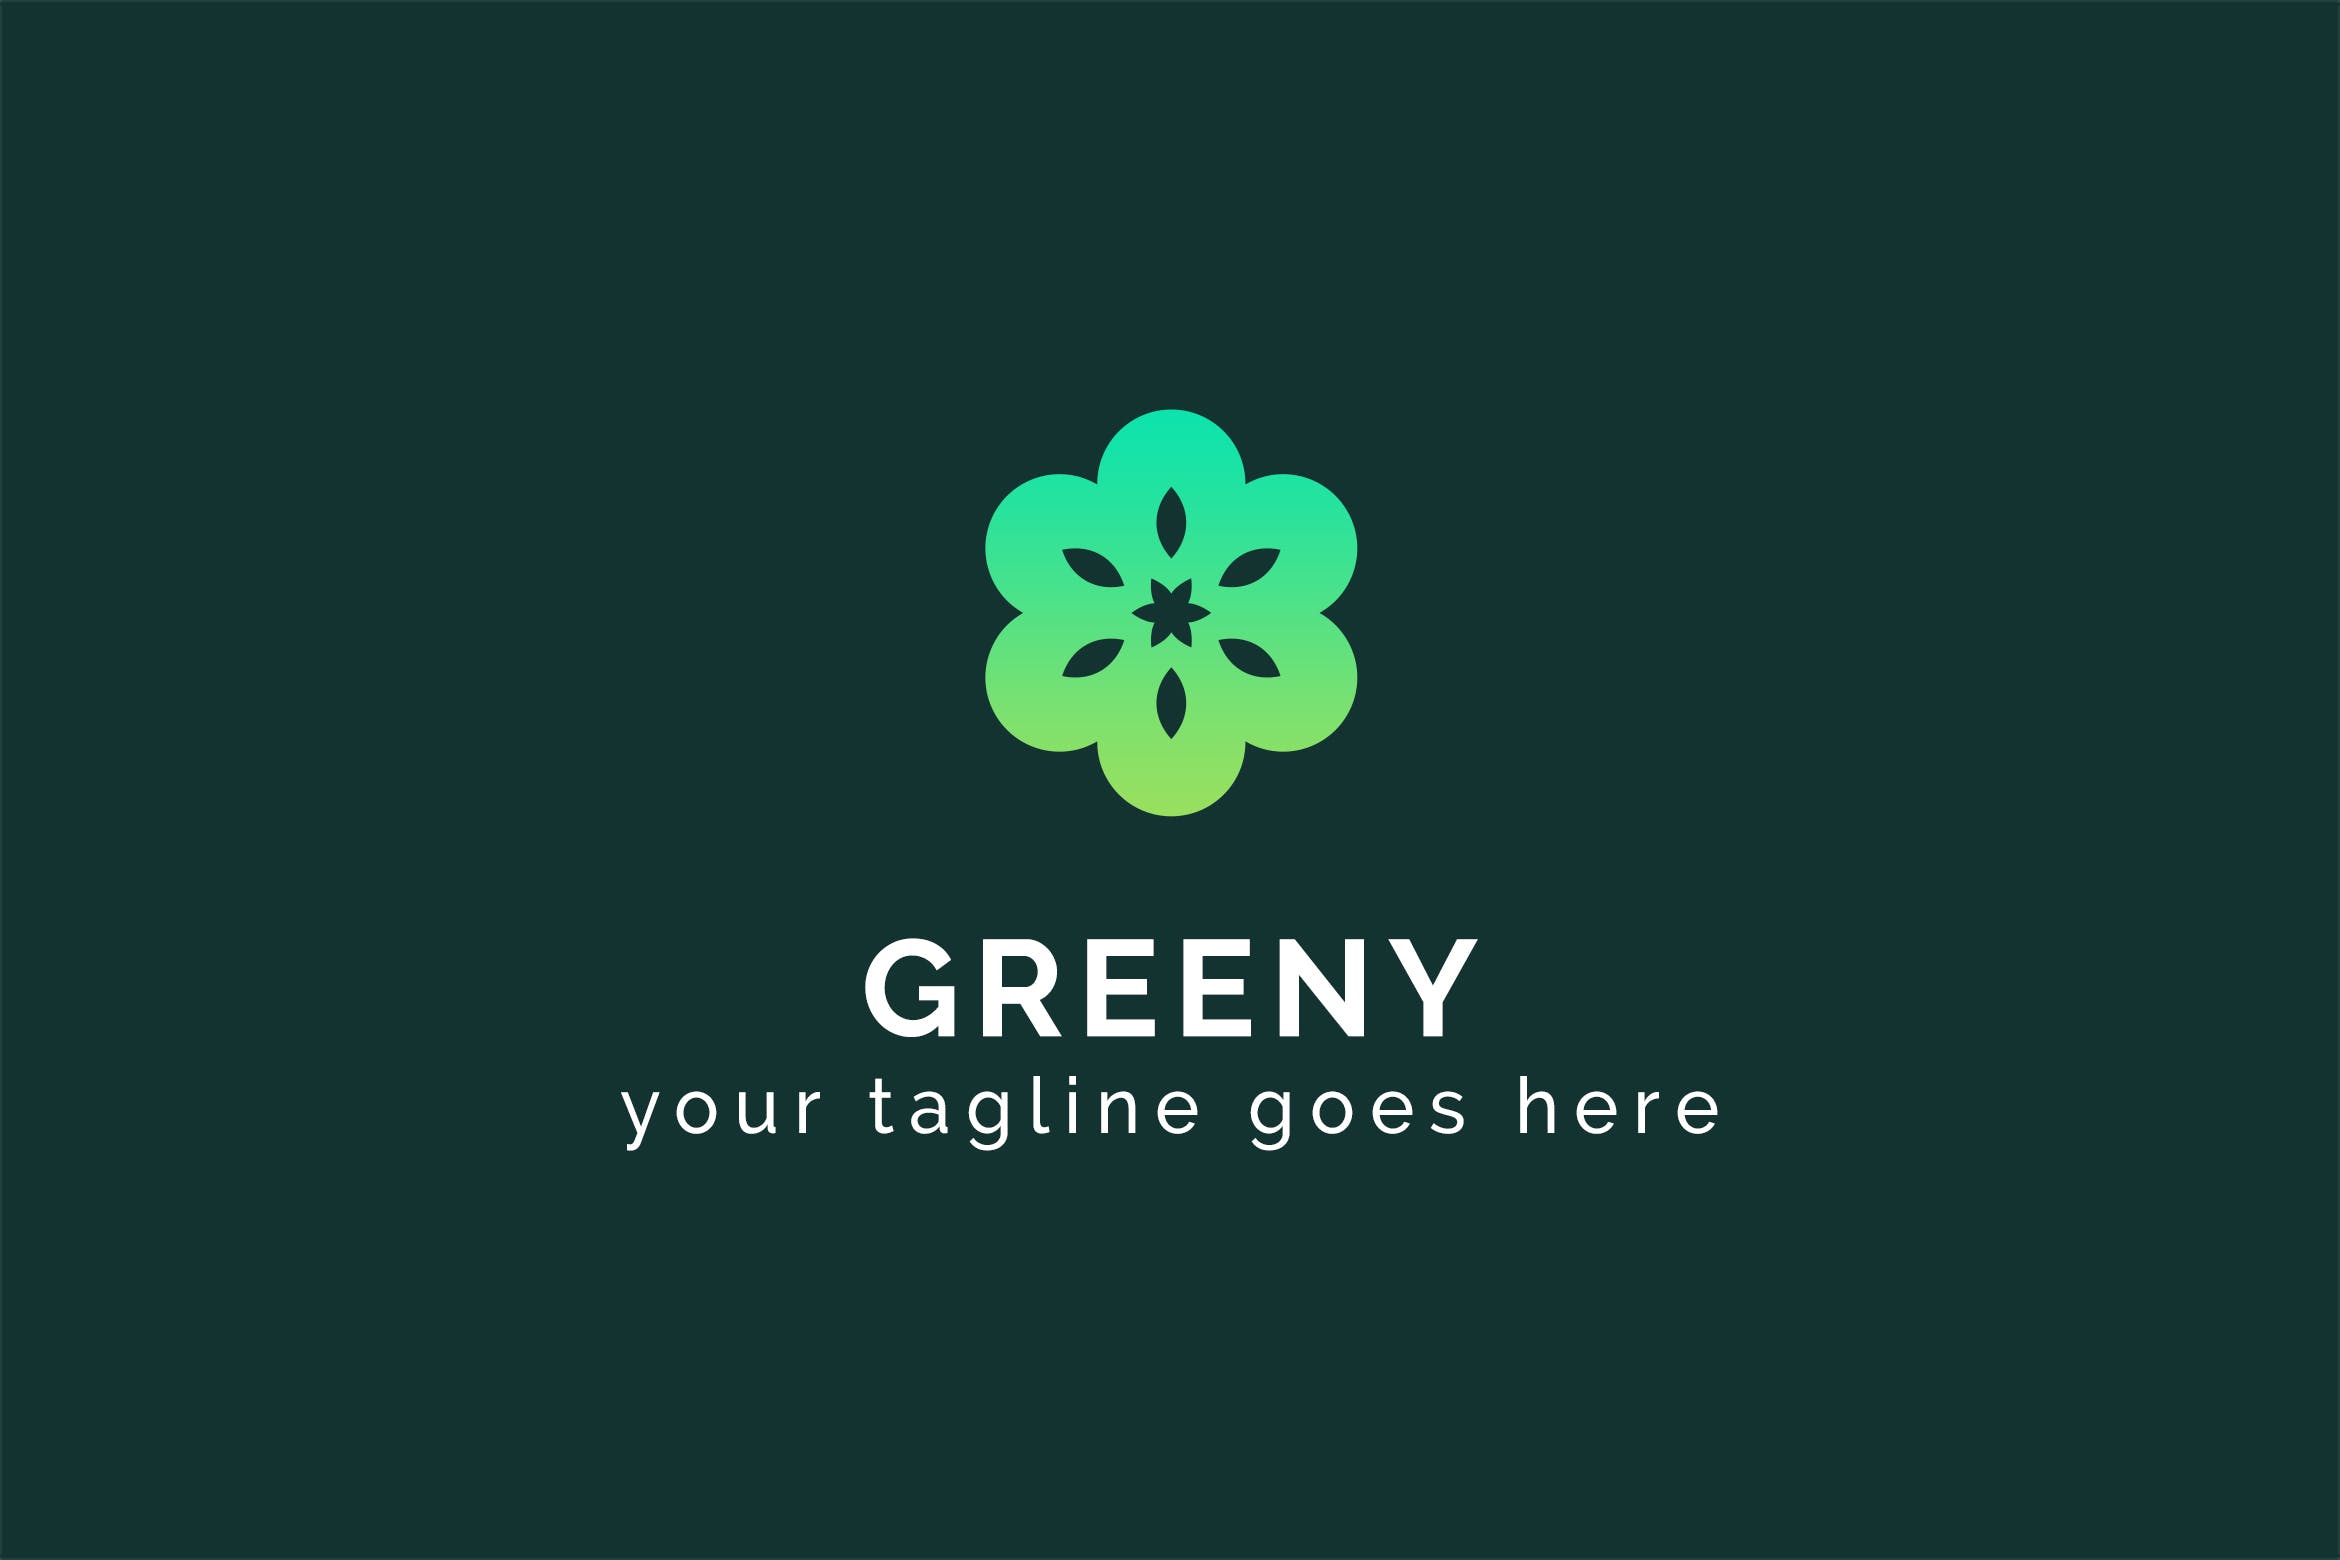 六瓣剪纸花卉图形Logo设计素材库精选模板 Greeny – Multipurpose Logo Template插图